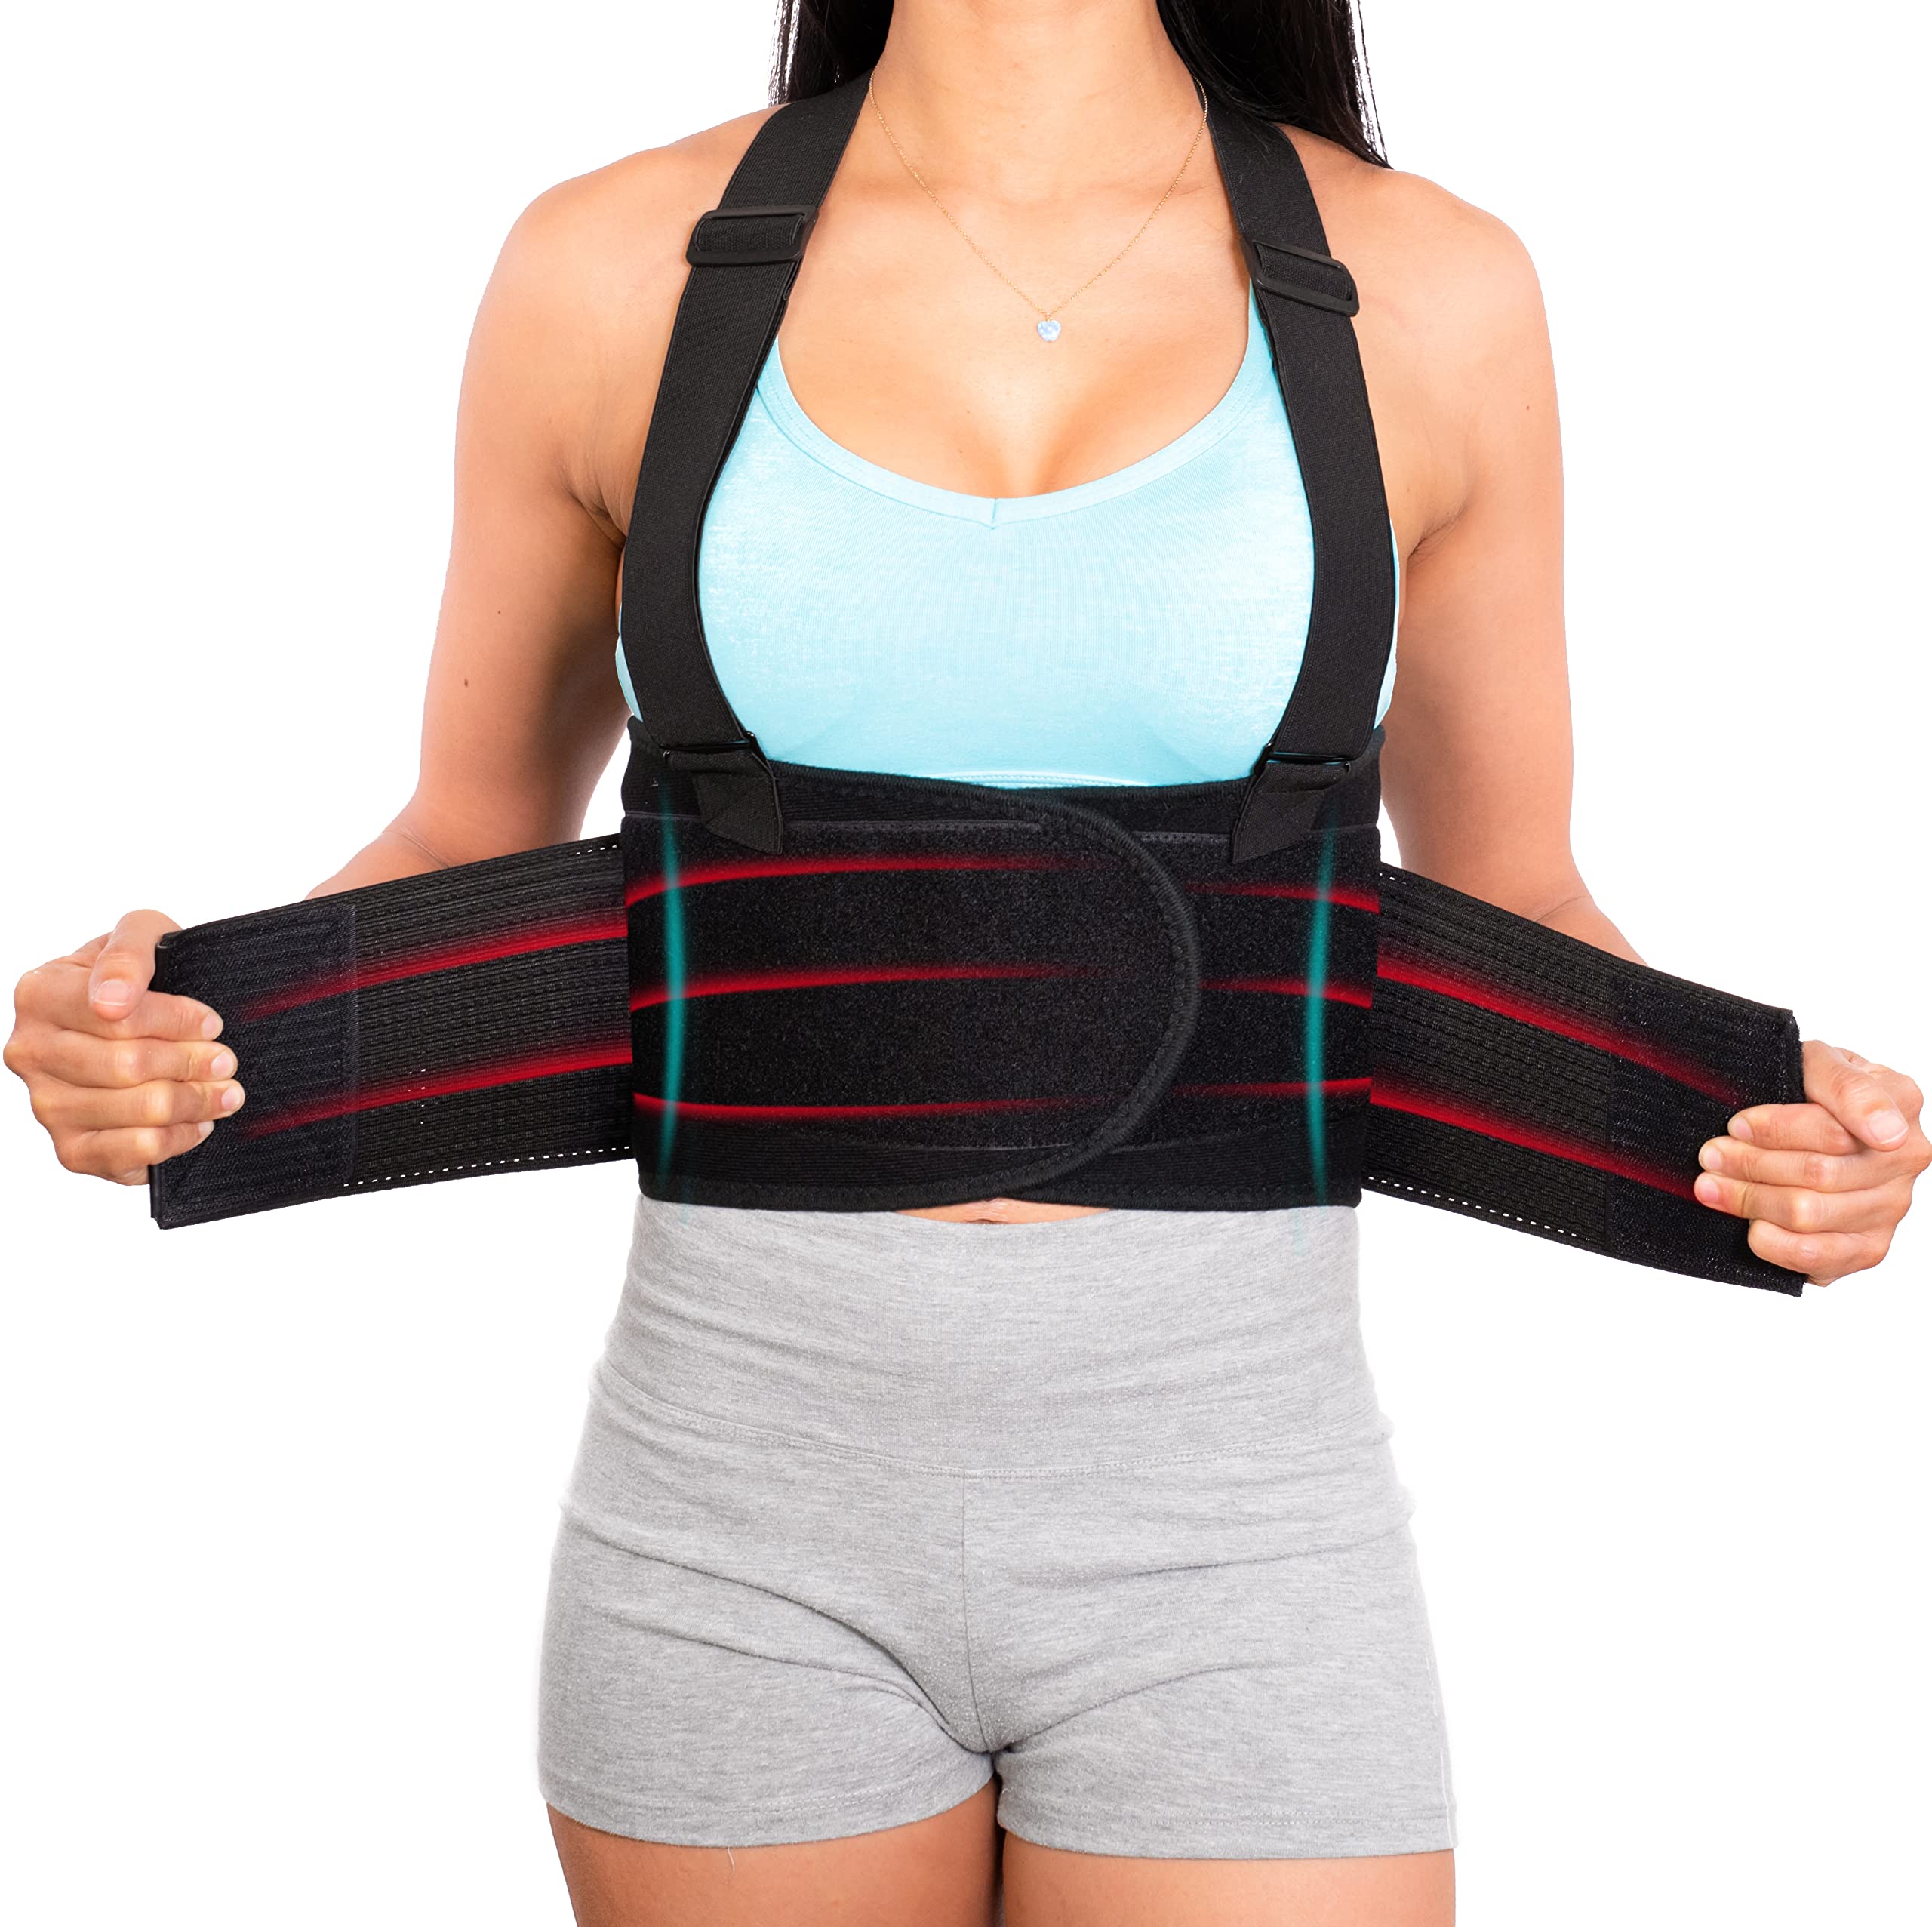 Lower Back Brace with Suspenders, Back Support Belt for Men & Women